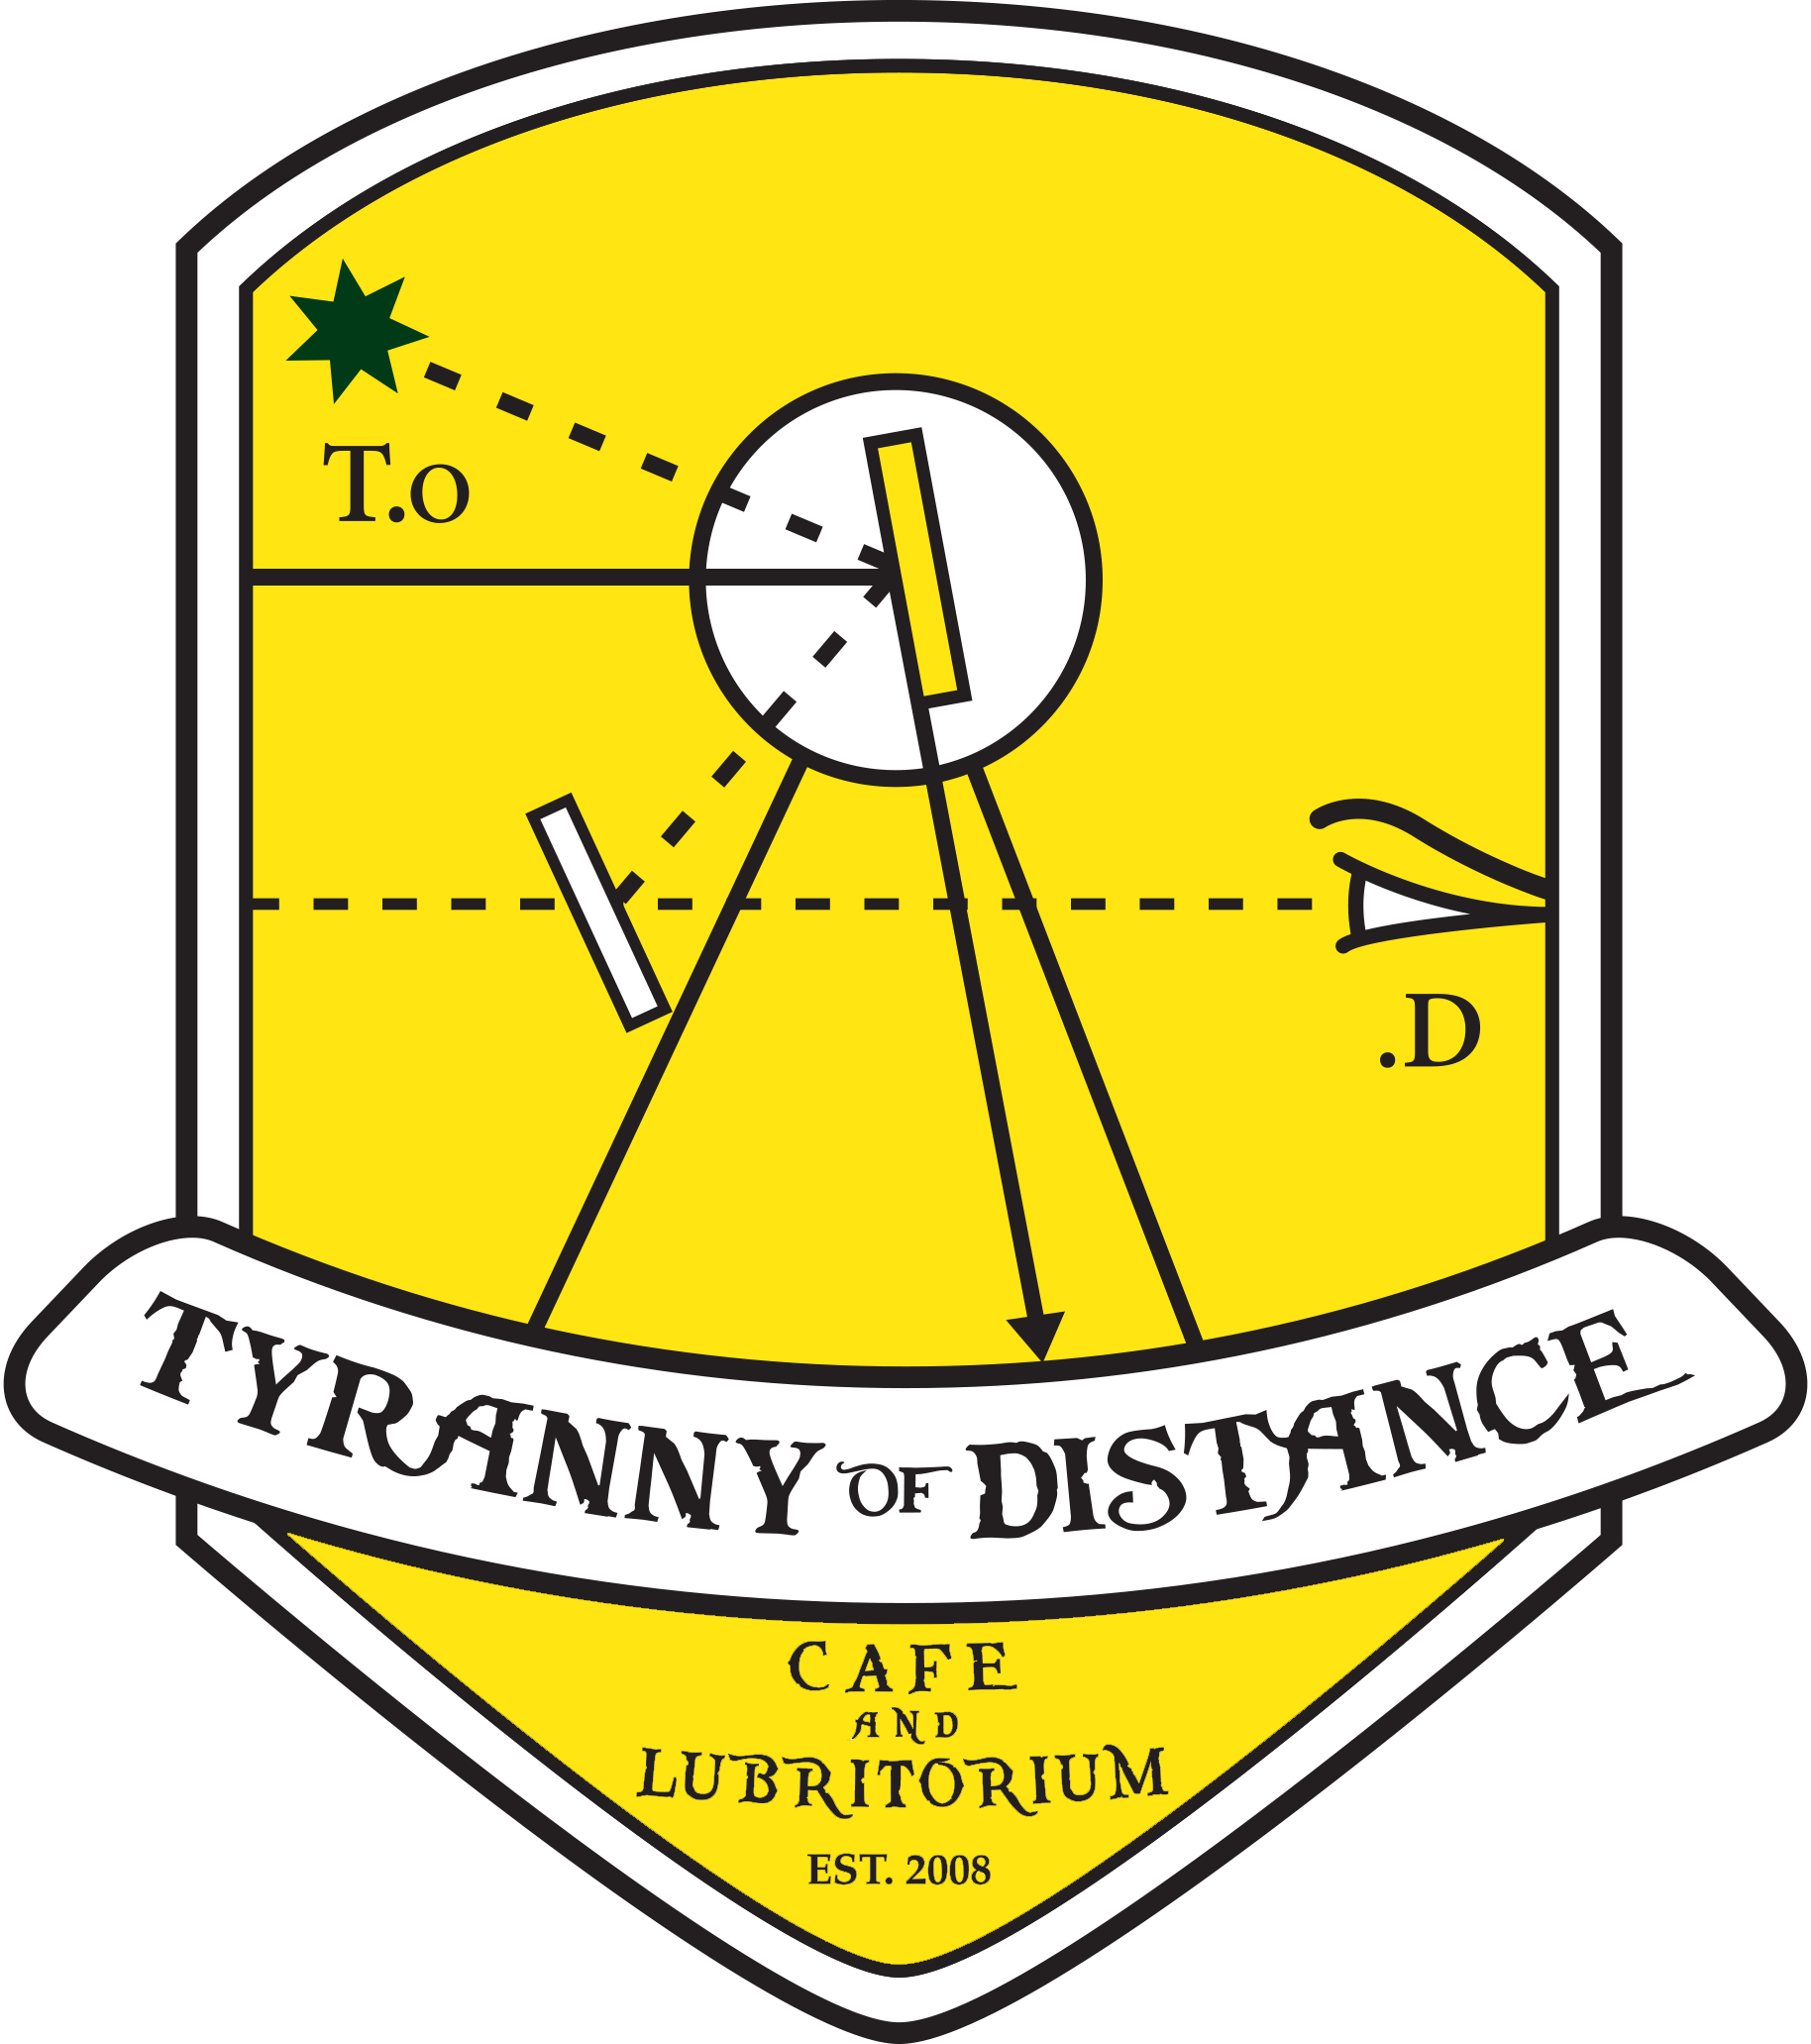 Tyranny of Distance